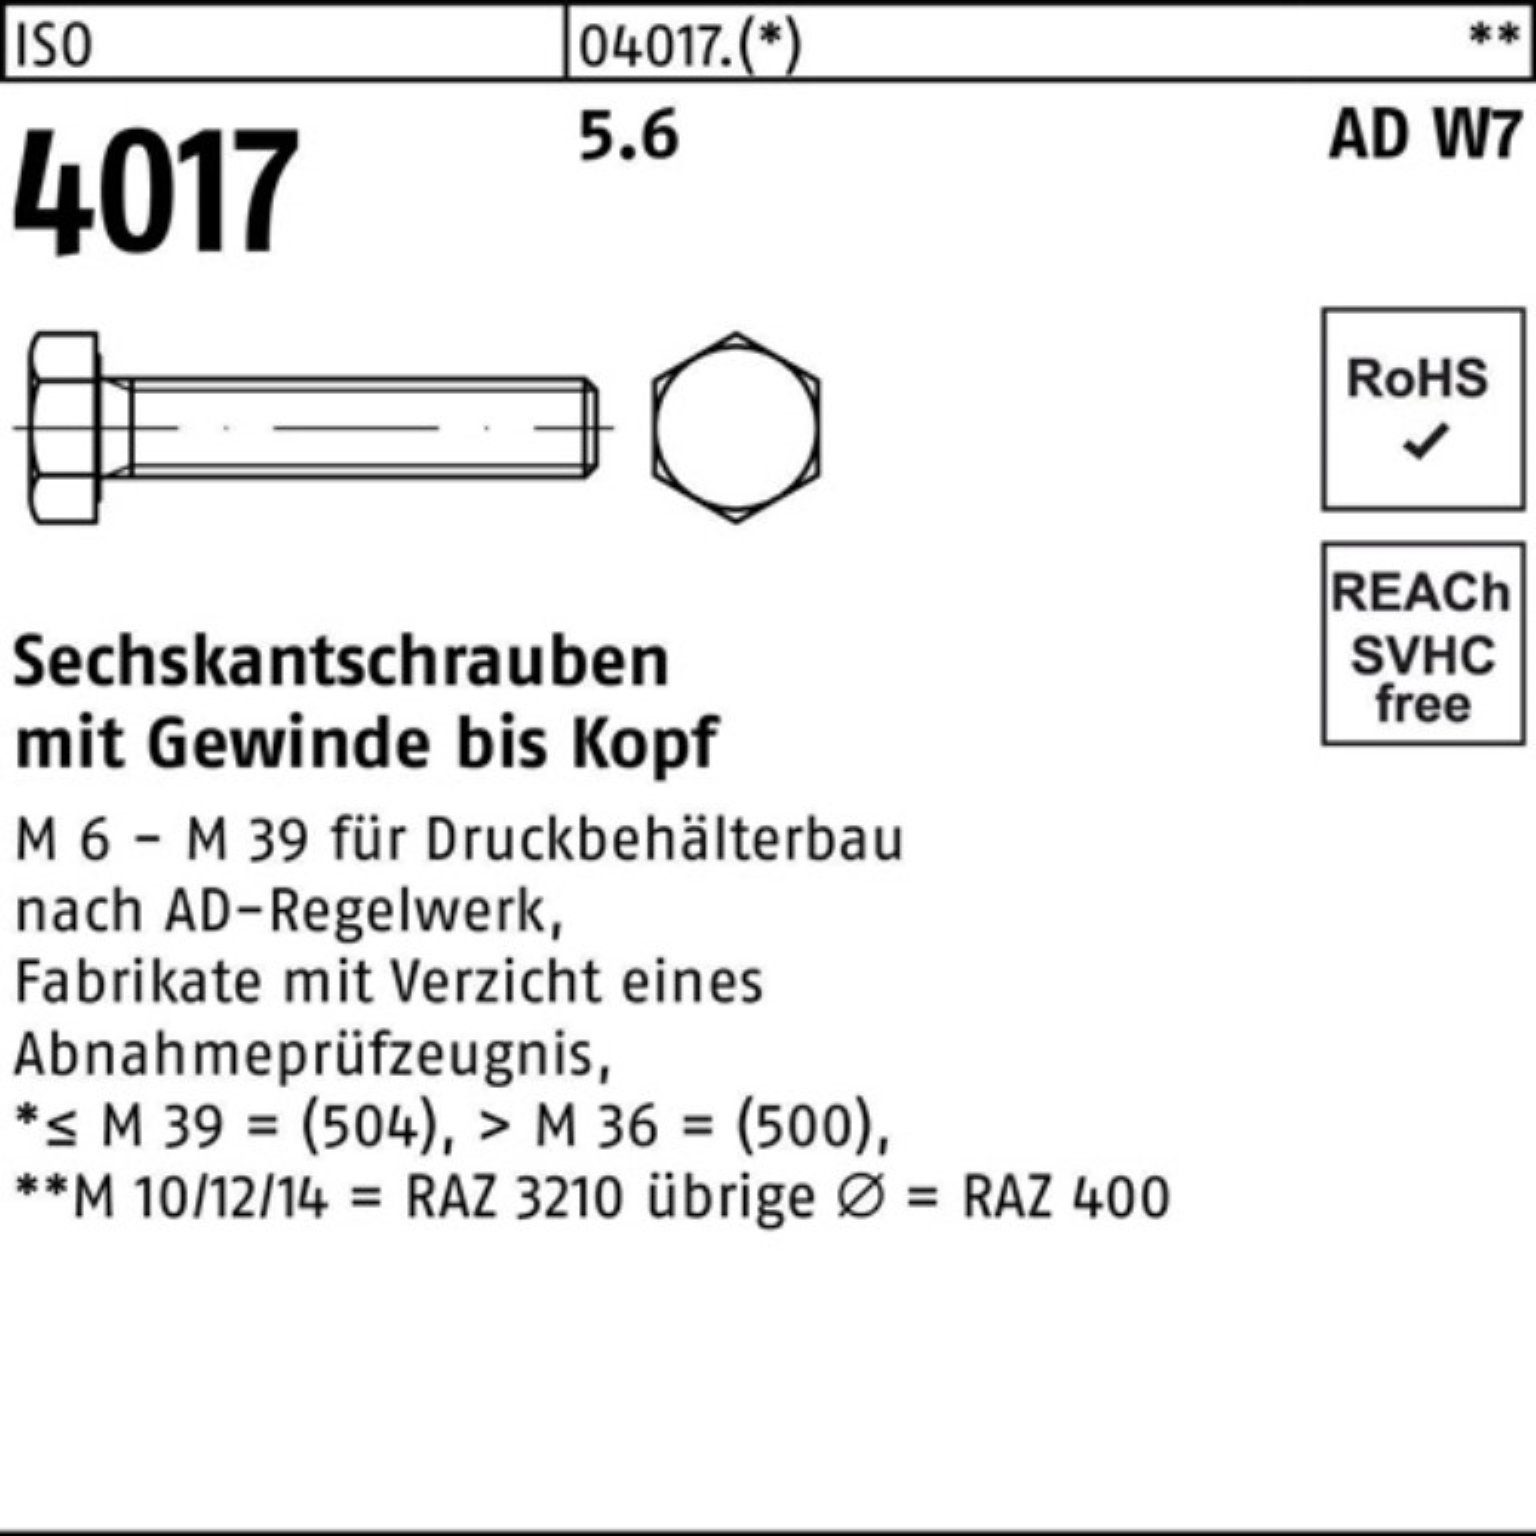 4017 IS M33x Stück Sechskantschraube W7 Sechskantschraube 90 AD 5.6 VG ISO 100er Pack 1 Bufab